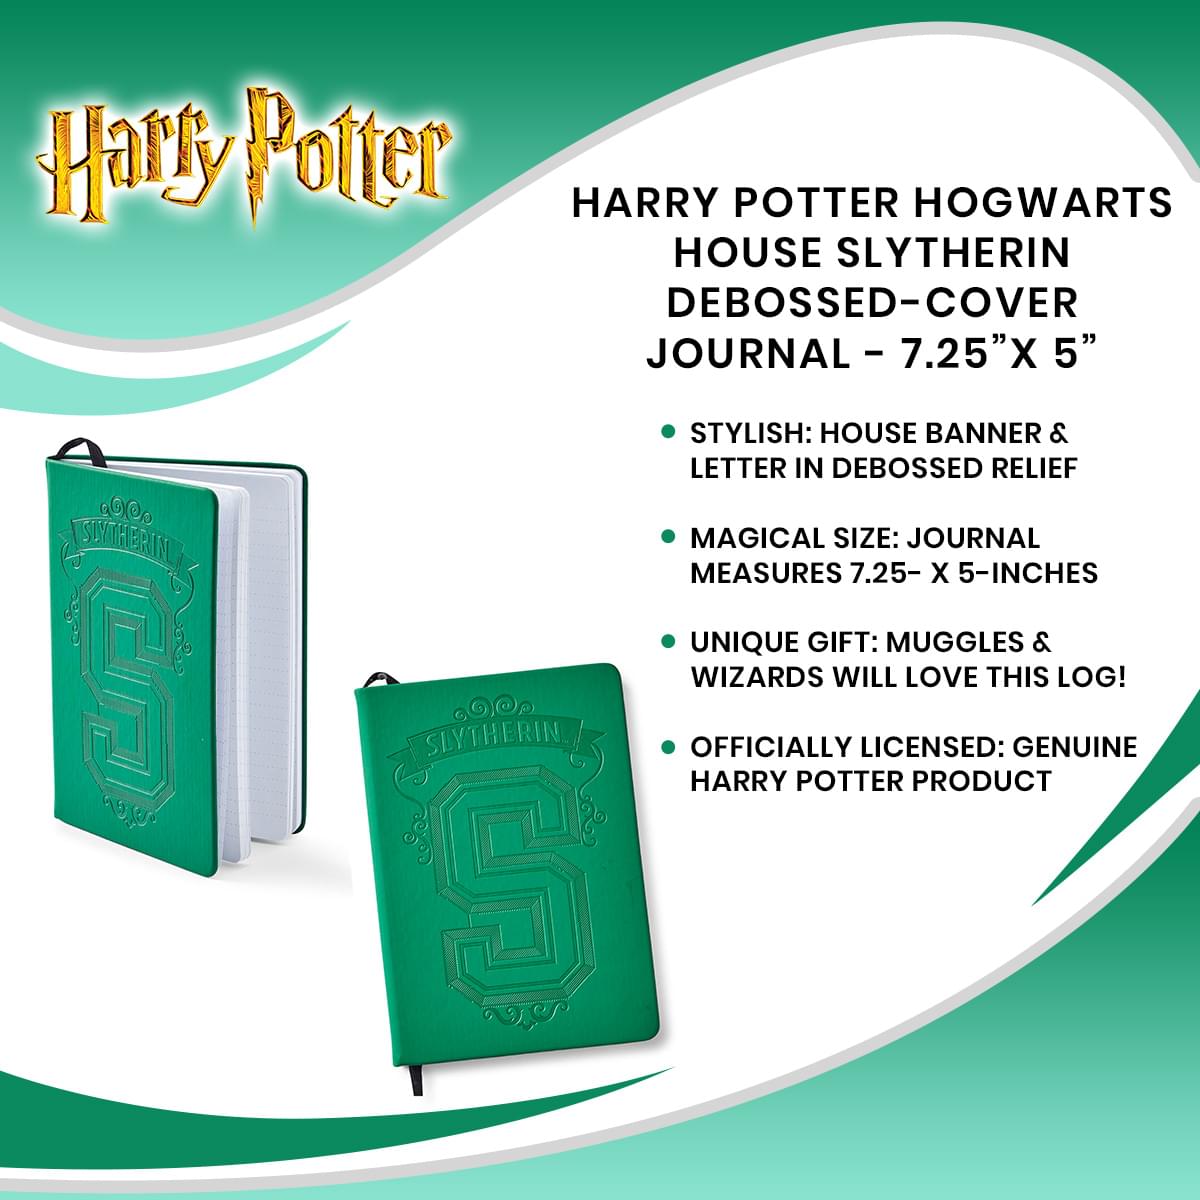 Harry Potter Hogwarts House Slytherin Debossed-Cover Journal - 7.25”x 5”